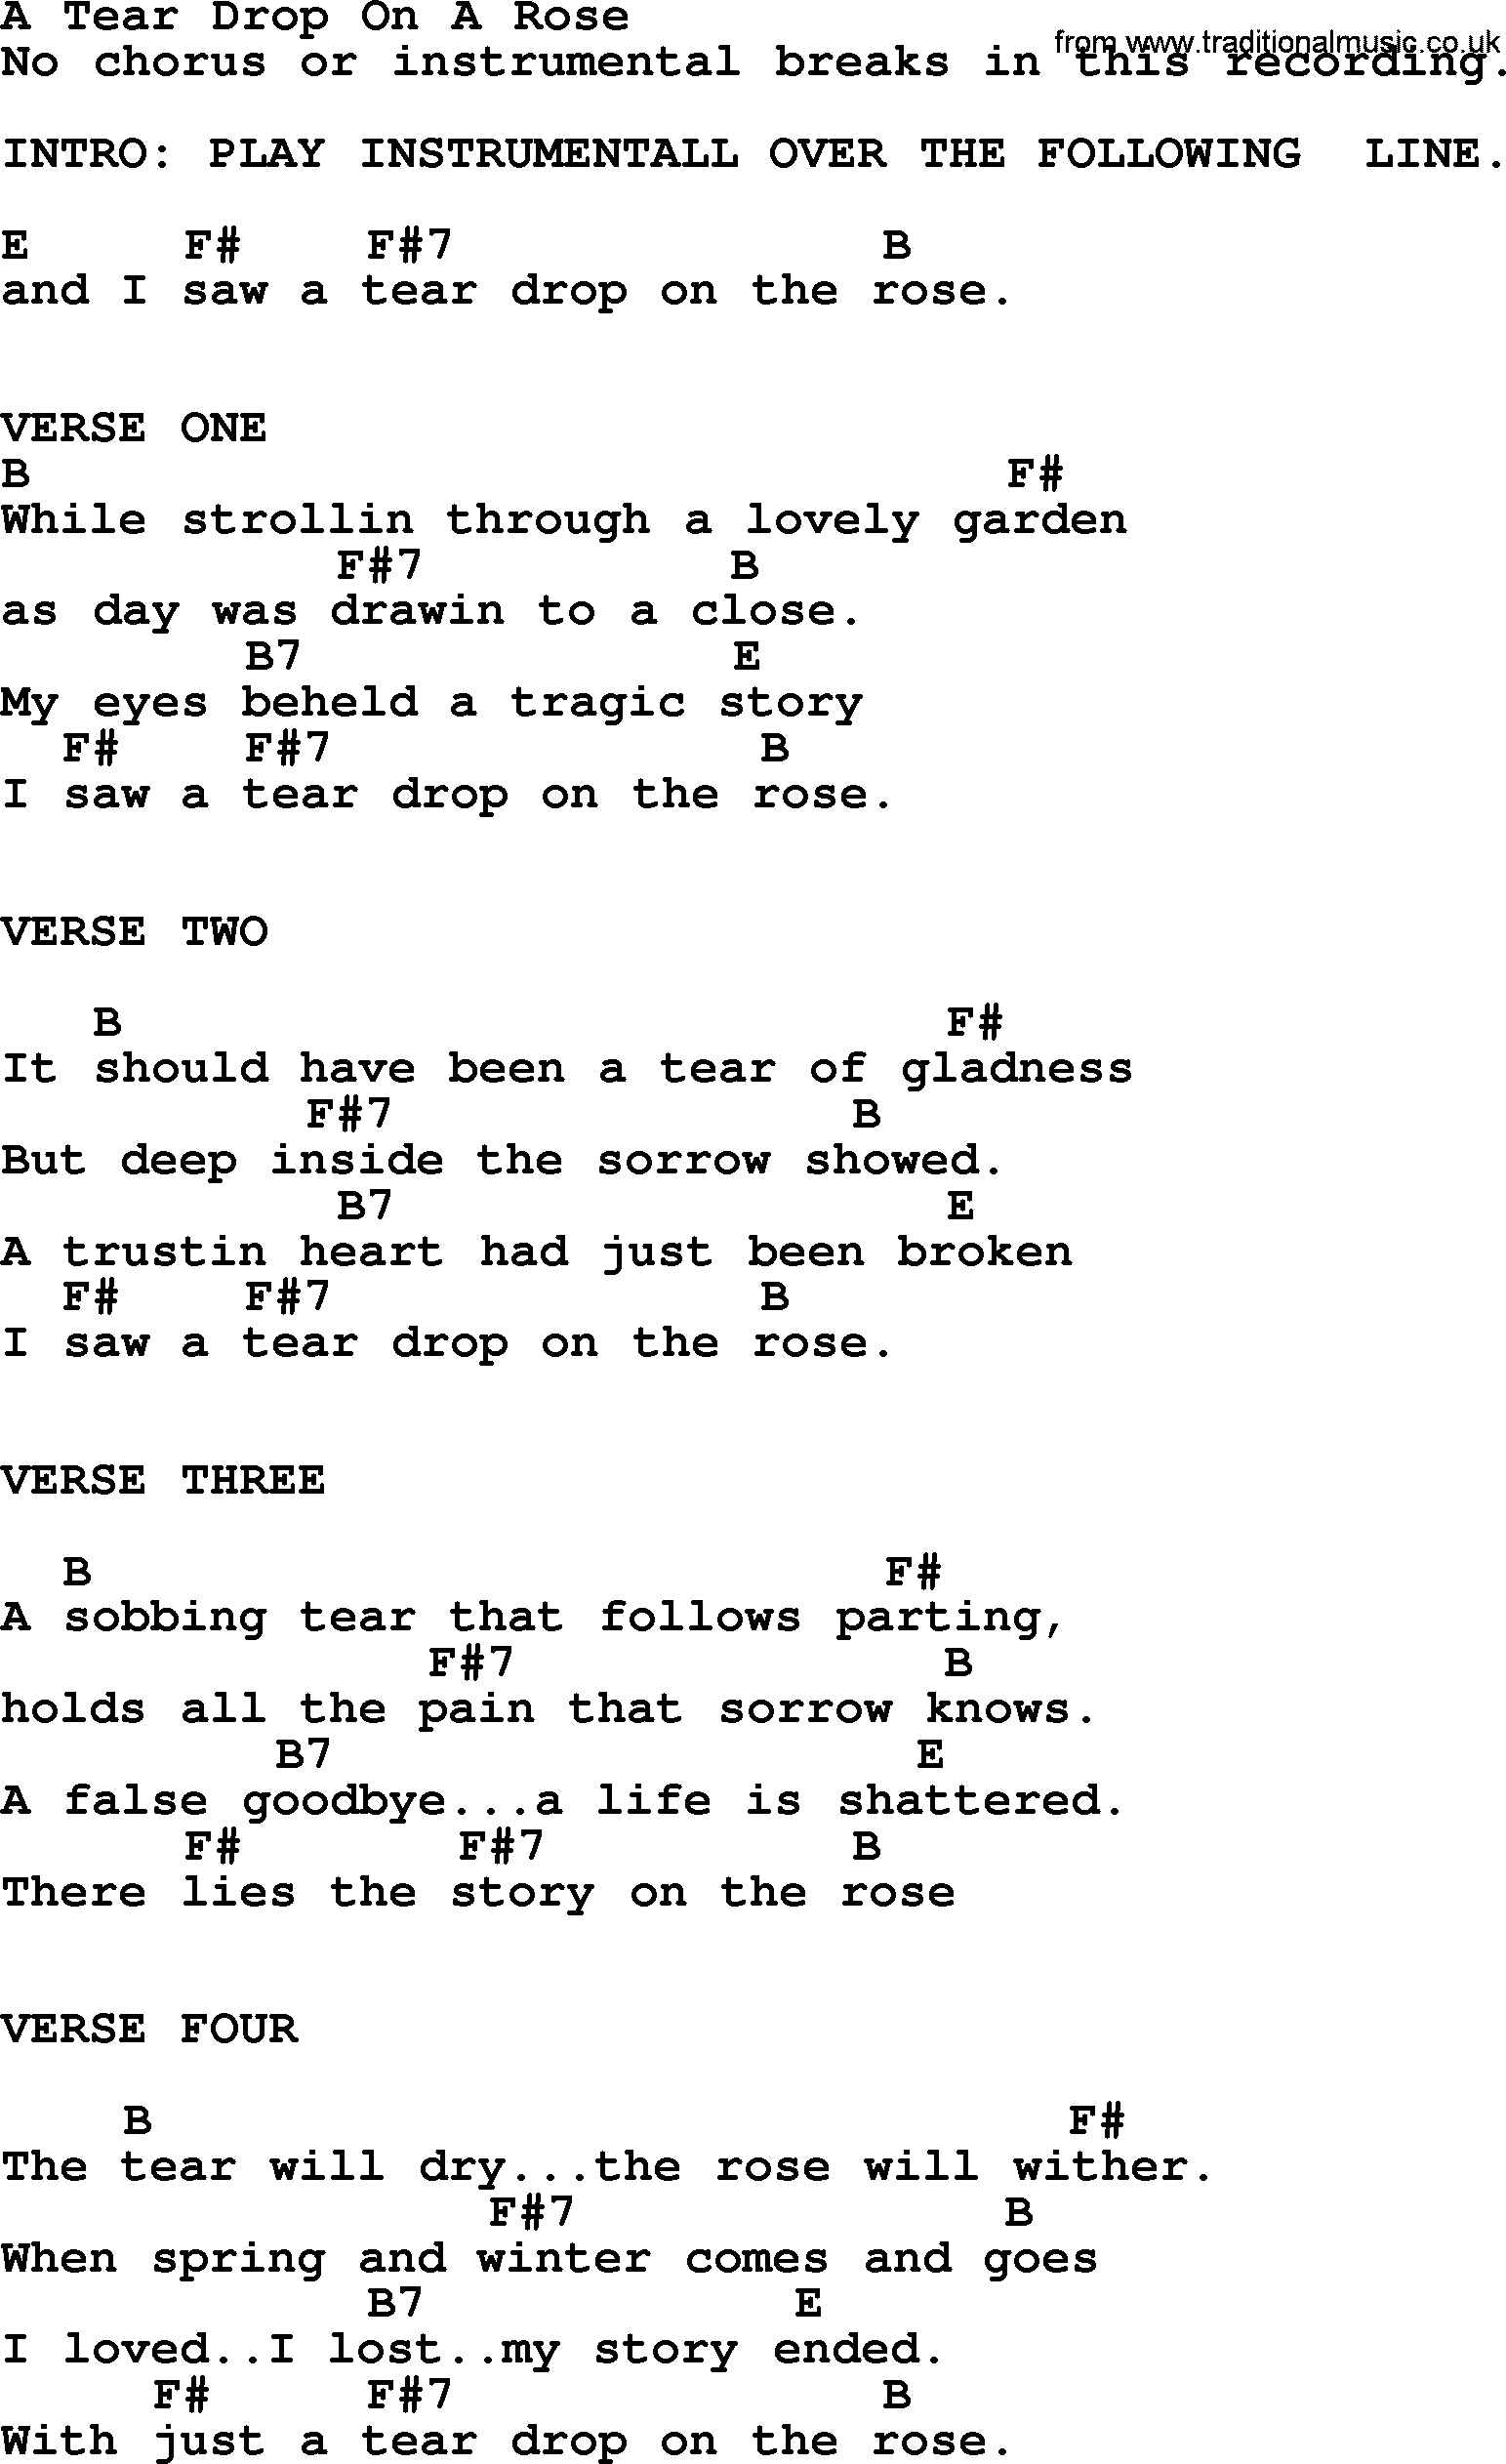 Hank Williams song A Tear Drop On A Rose, lyrics and chords